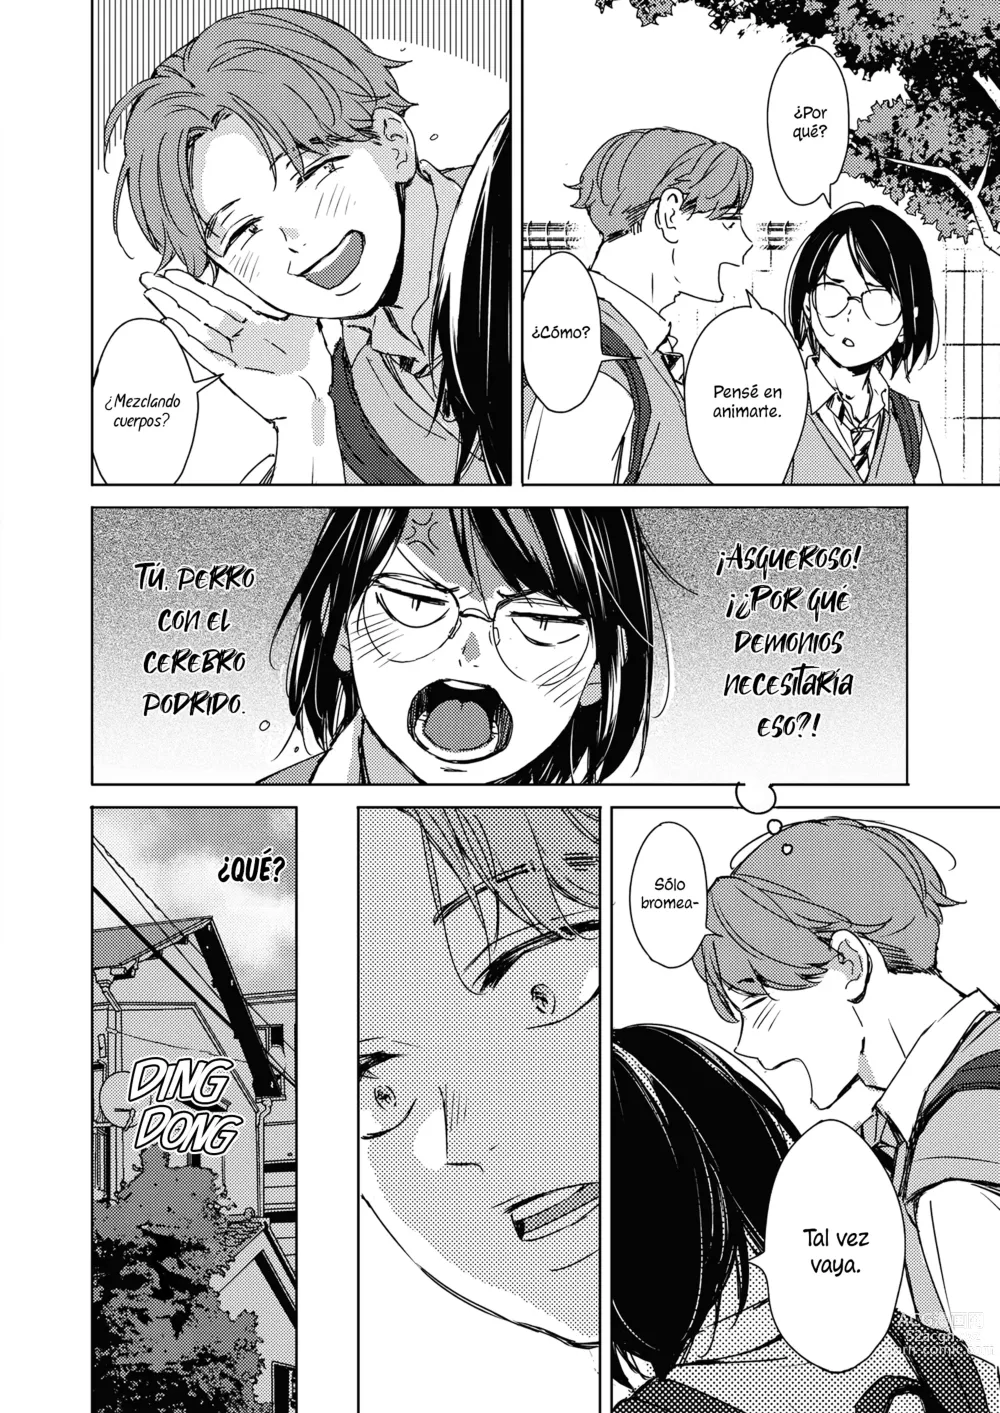 Page 4 of manga Gafas del ~Primer amor~